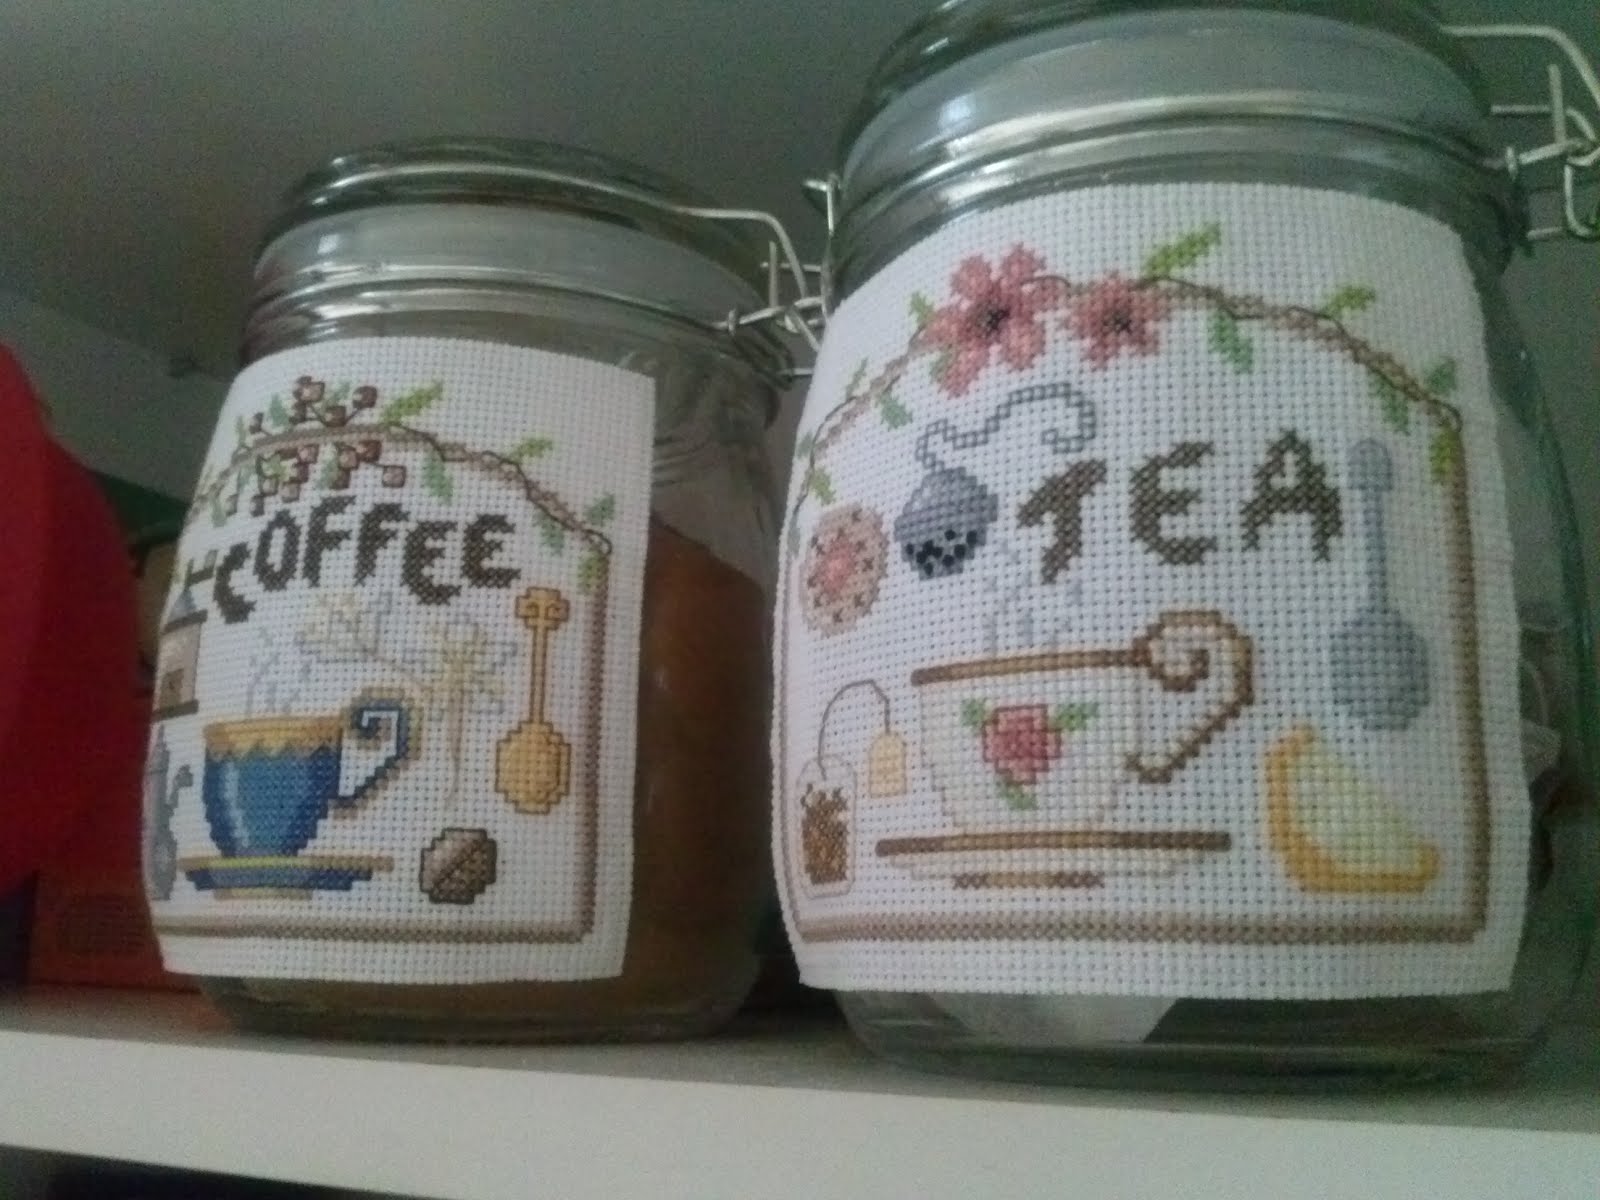 Kawa i herbata